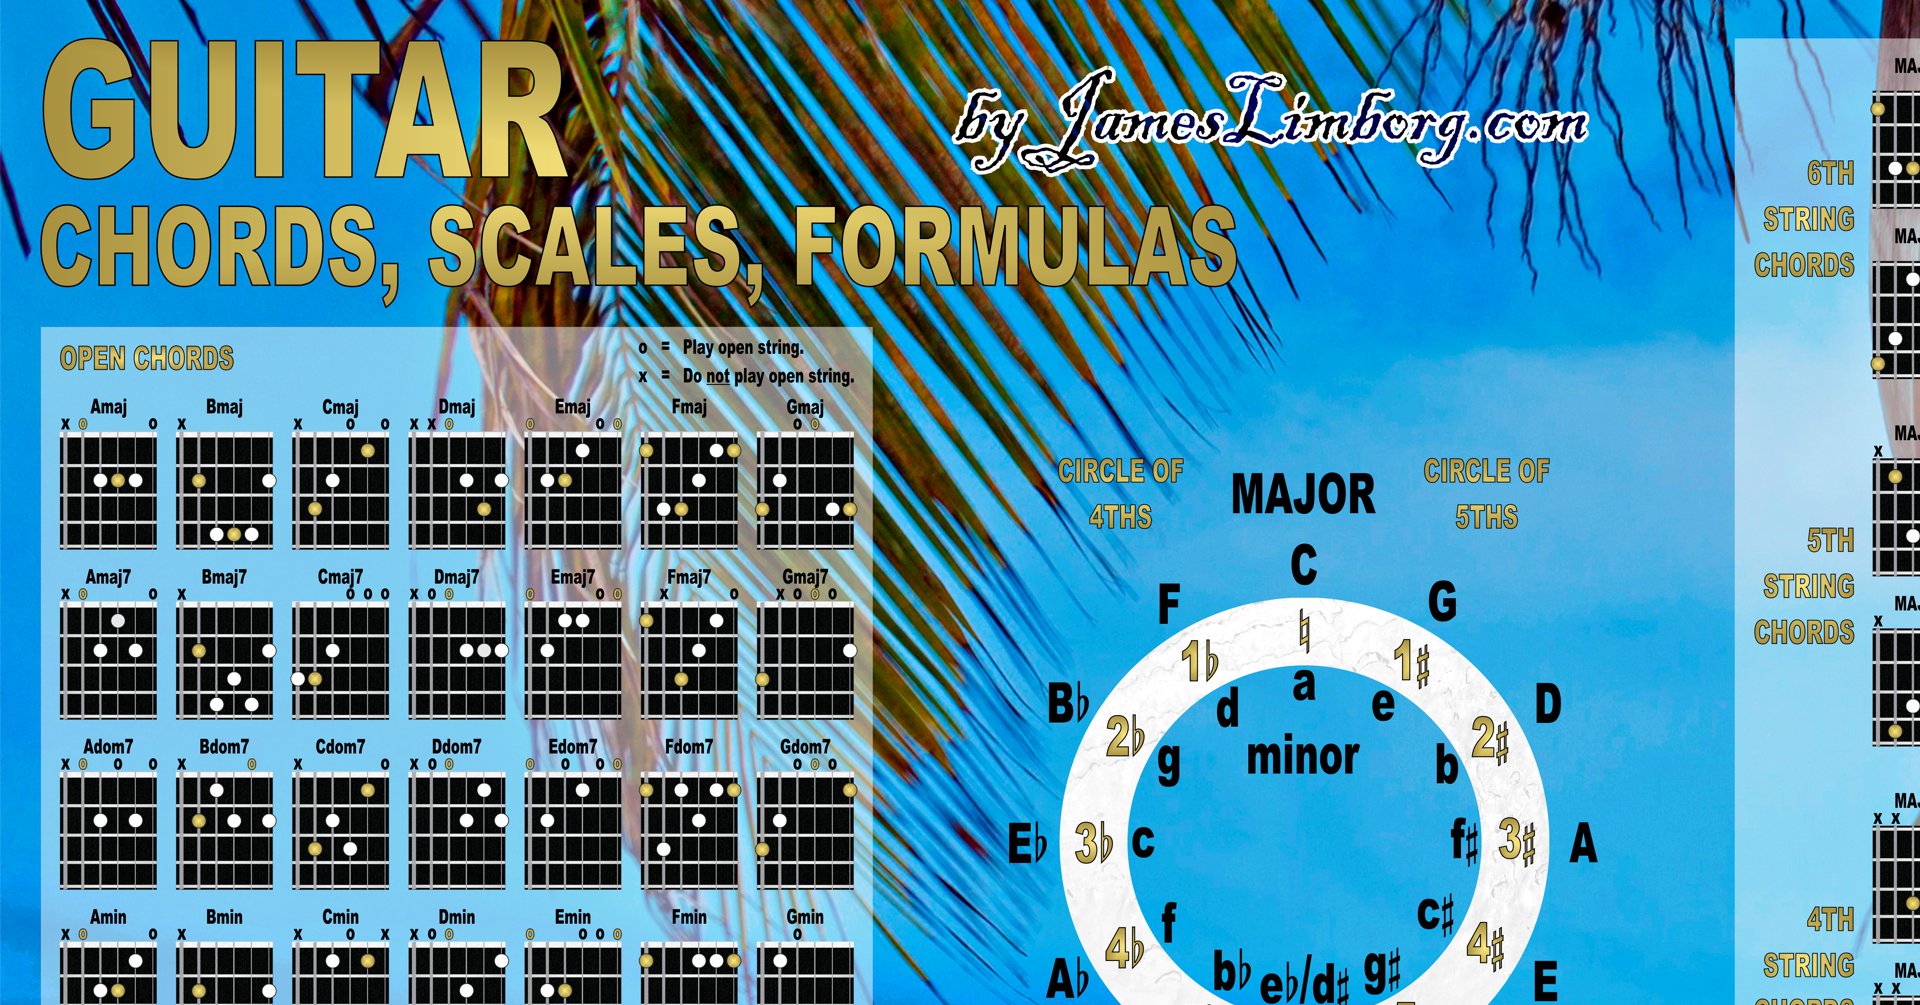 Guitar scales chart pdf free